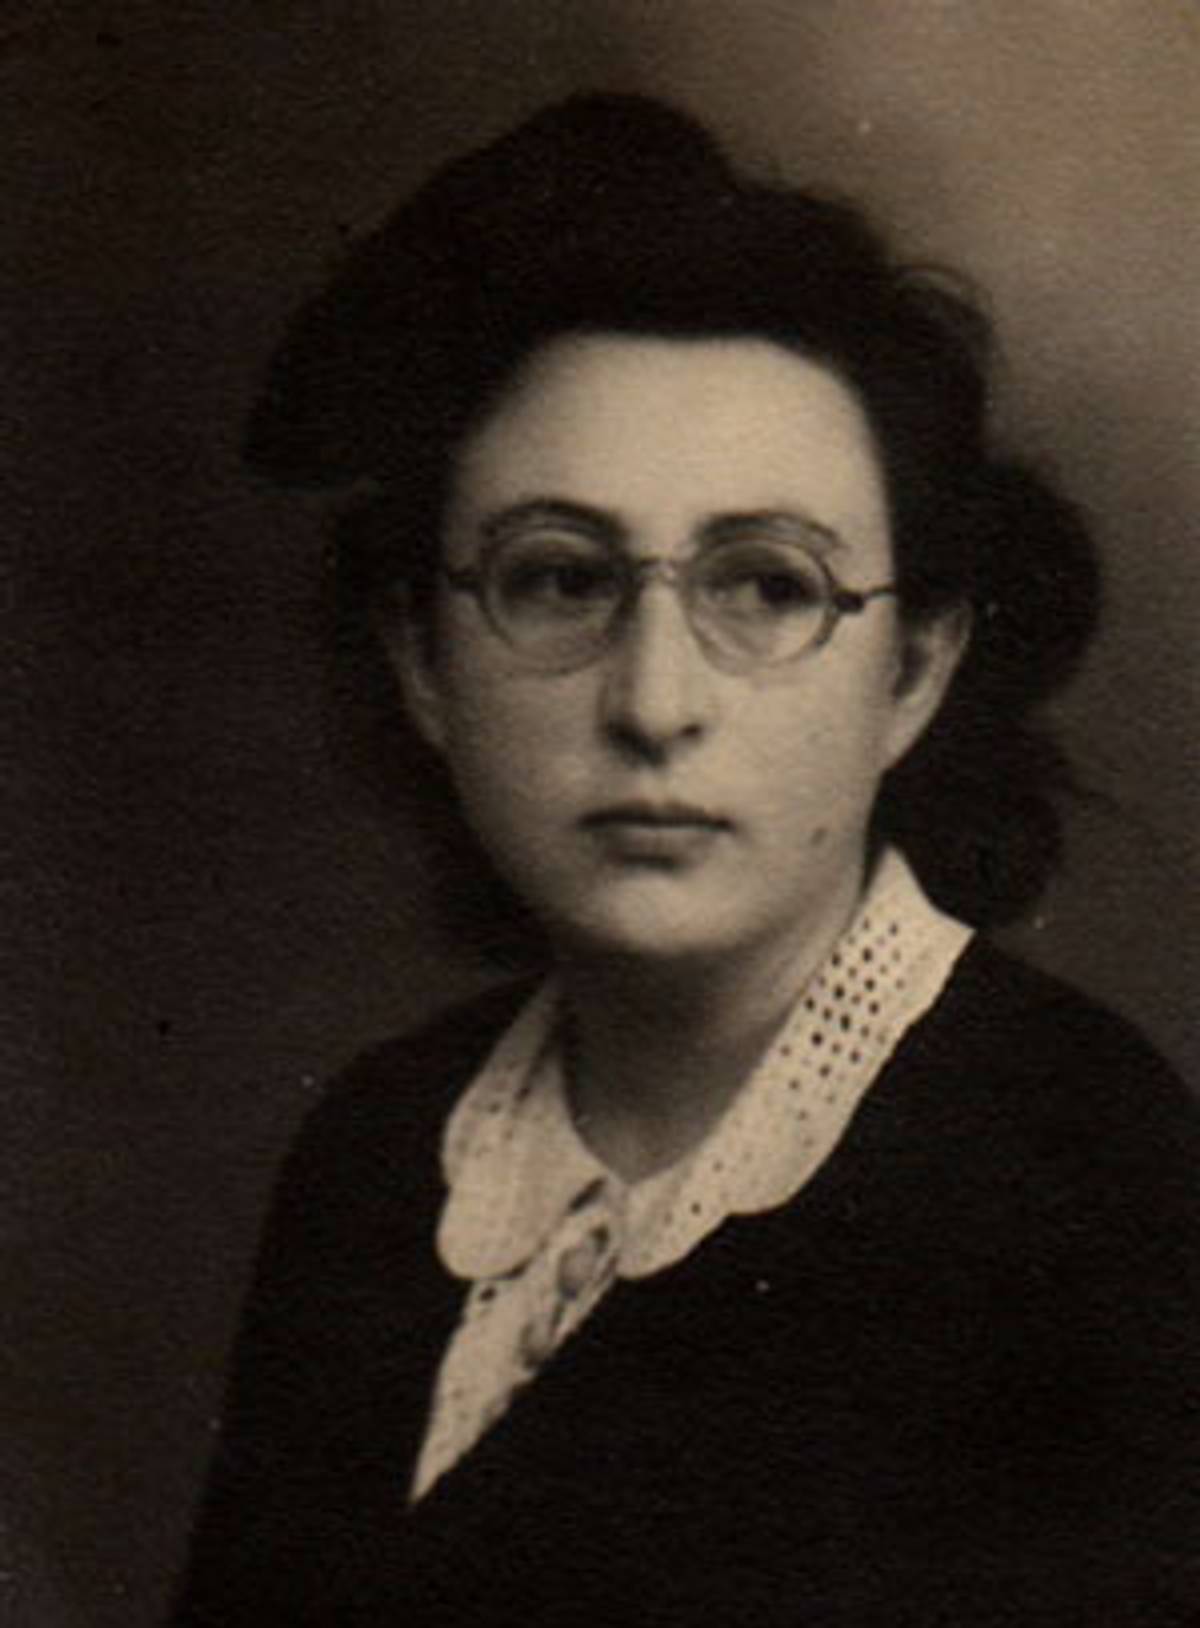 Zenia in 1946. (All photos courtesy the author.)